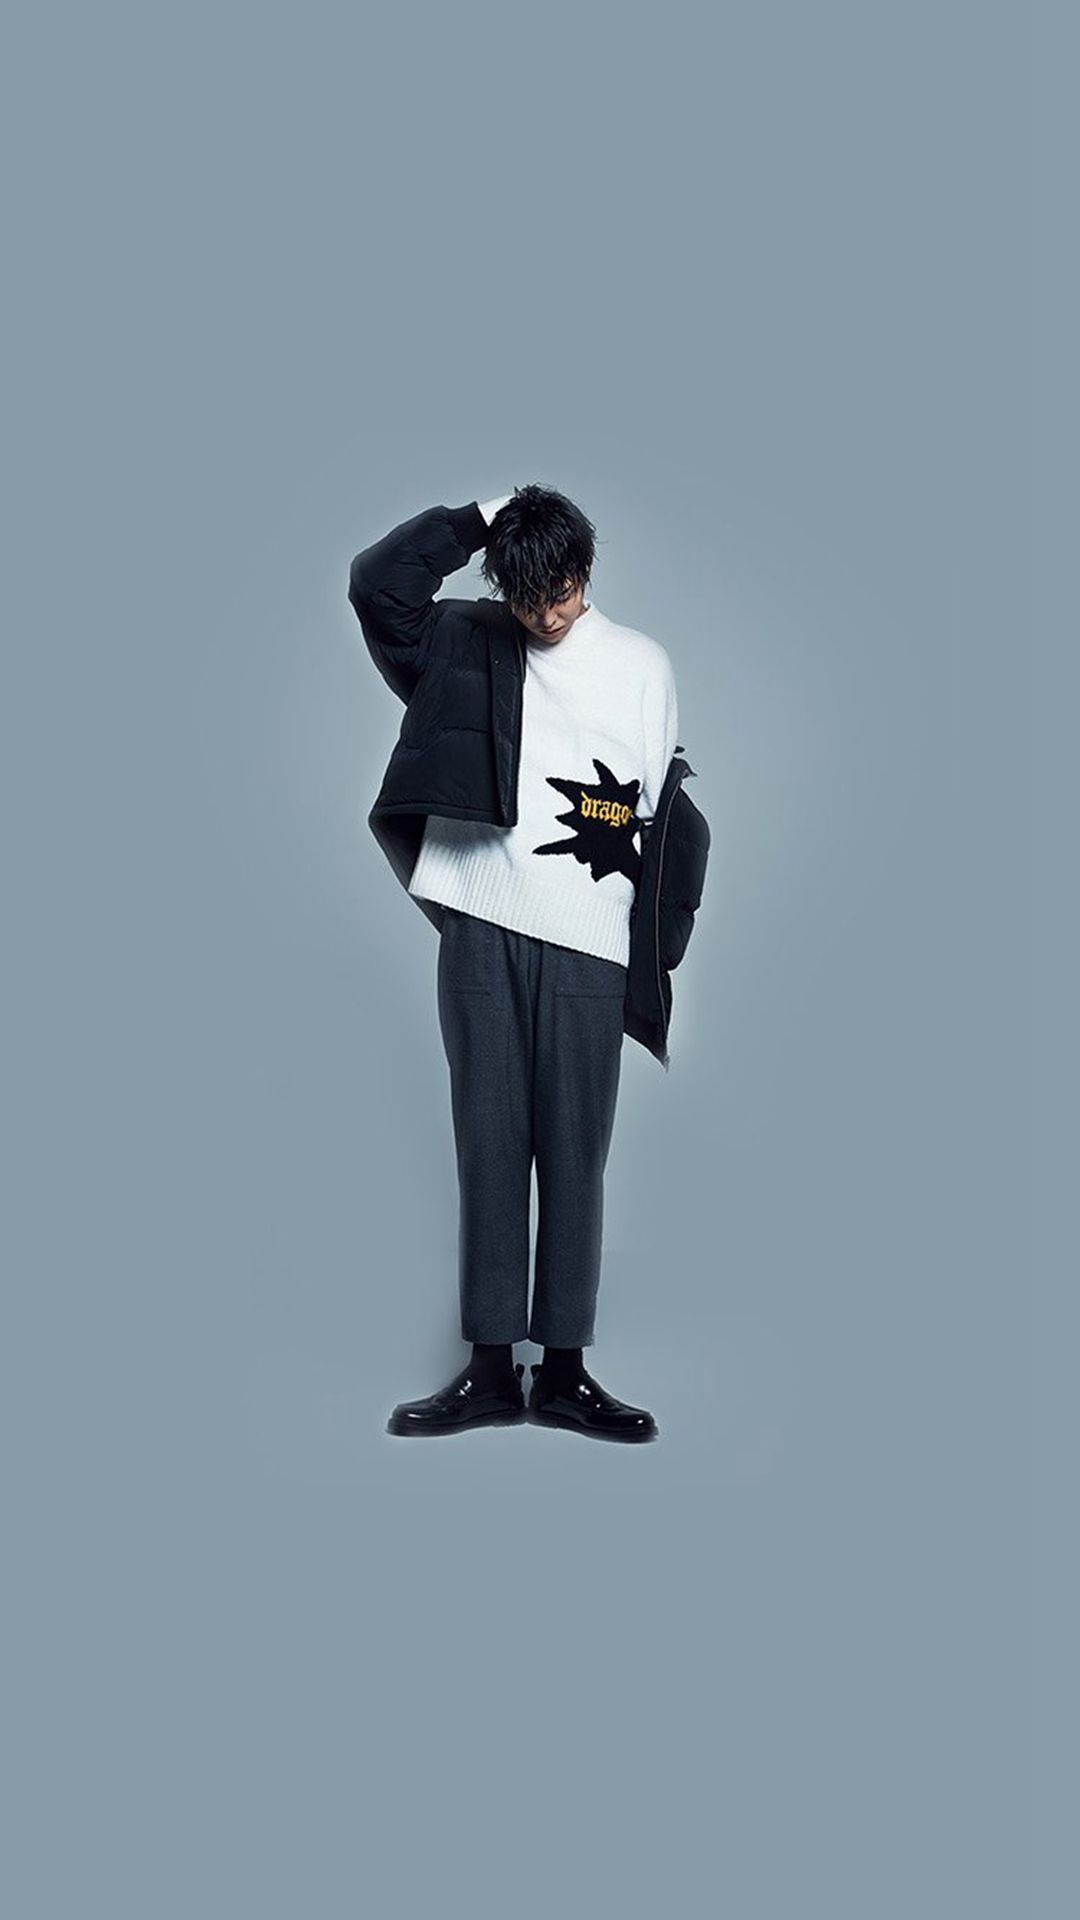 Gdragon Bigbang YG Kpop Boy iPhone 8 Wallpaper Free Download